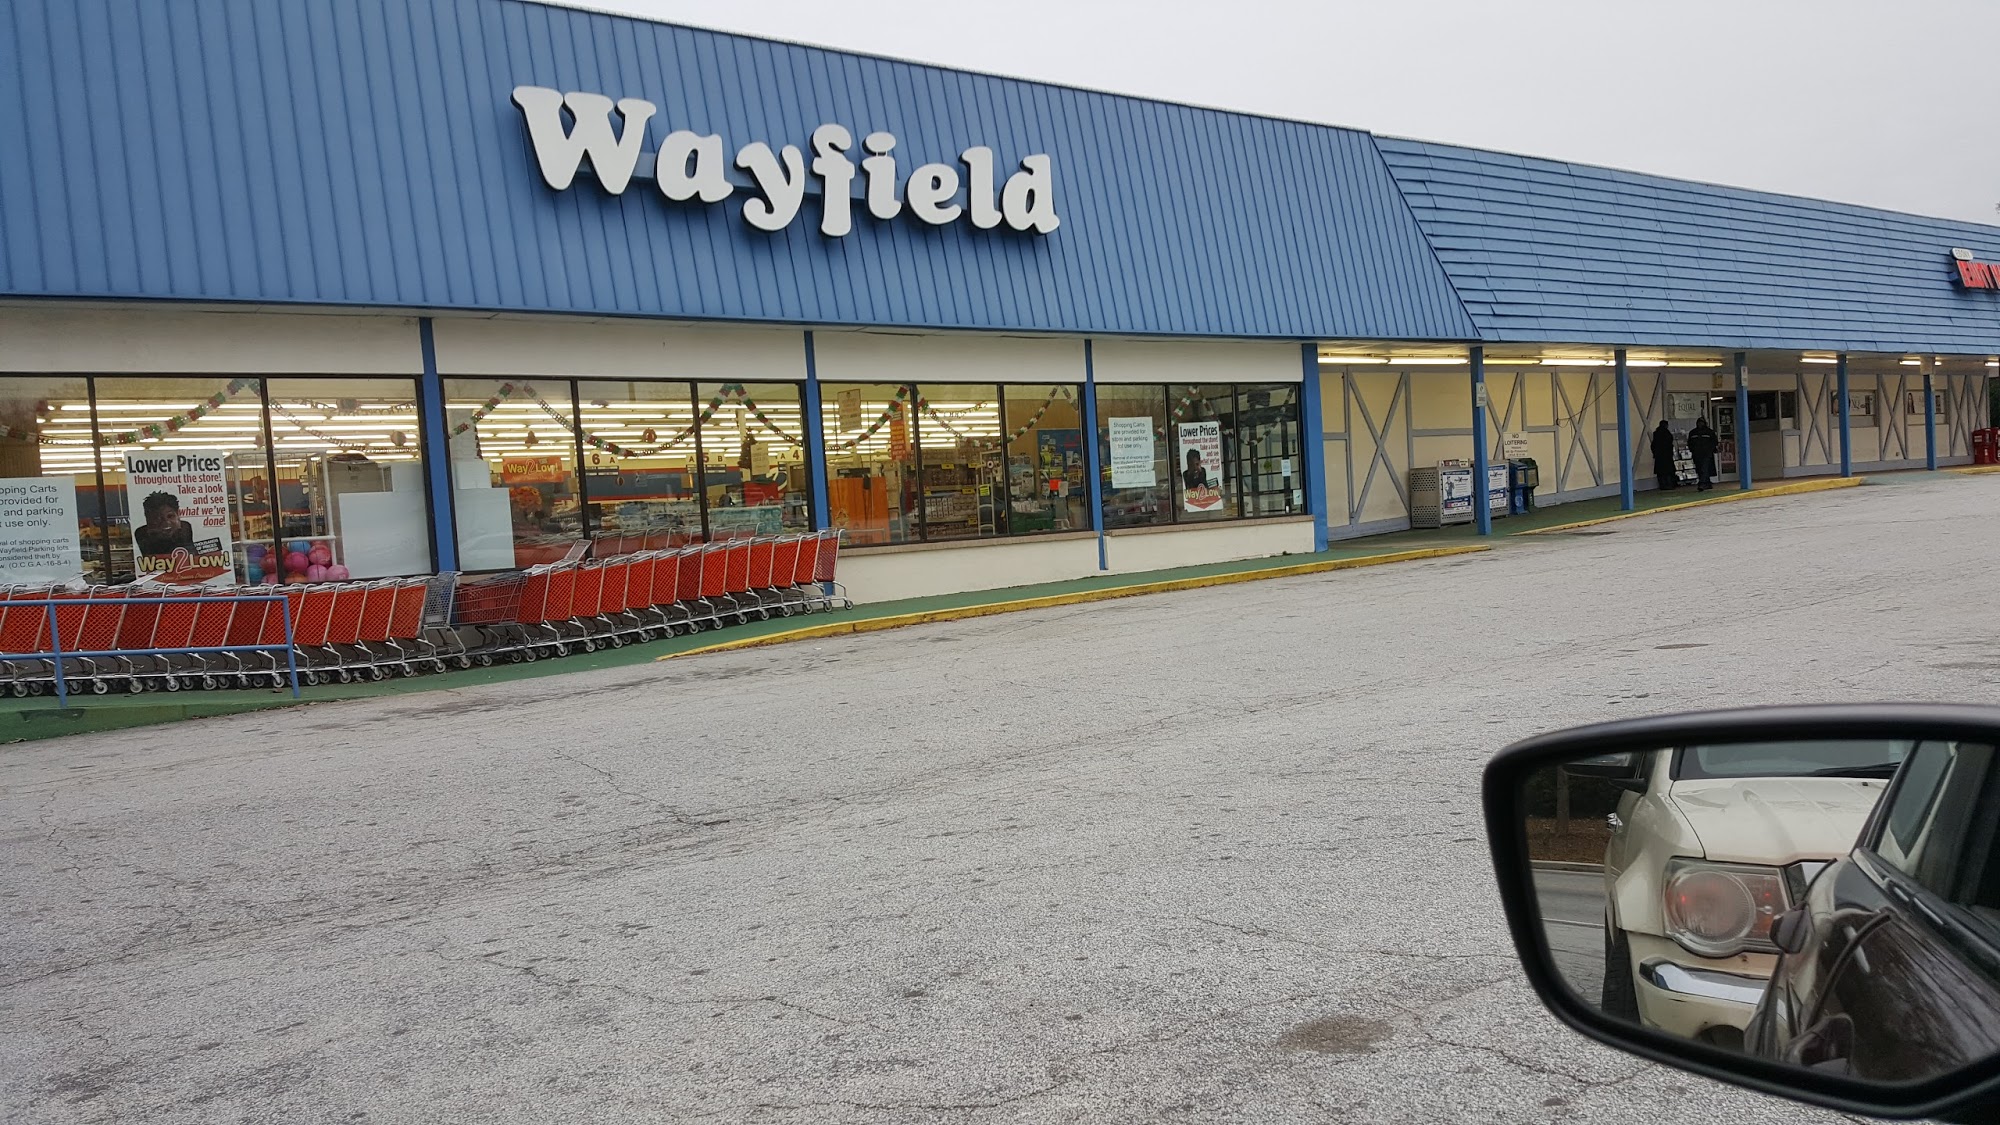 Wayfield Foods Inc